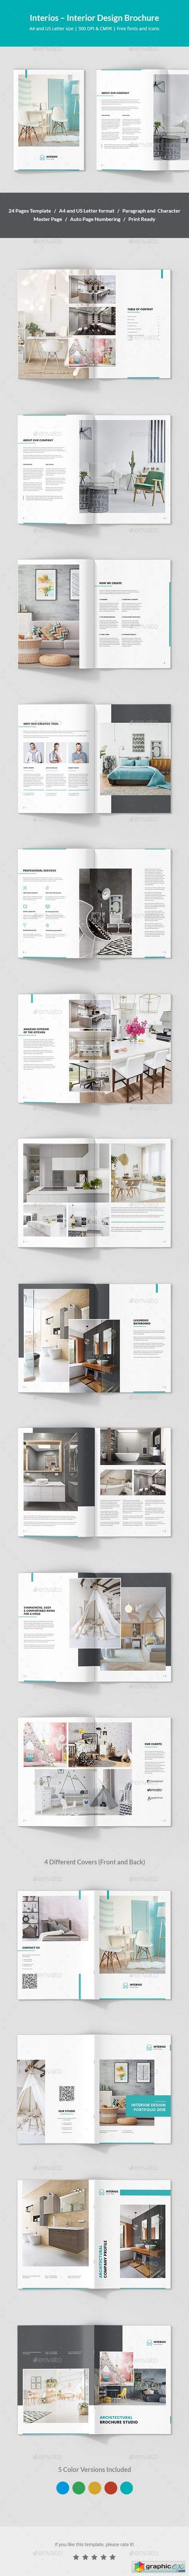 Interios – Interior Design Brochure